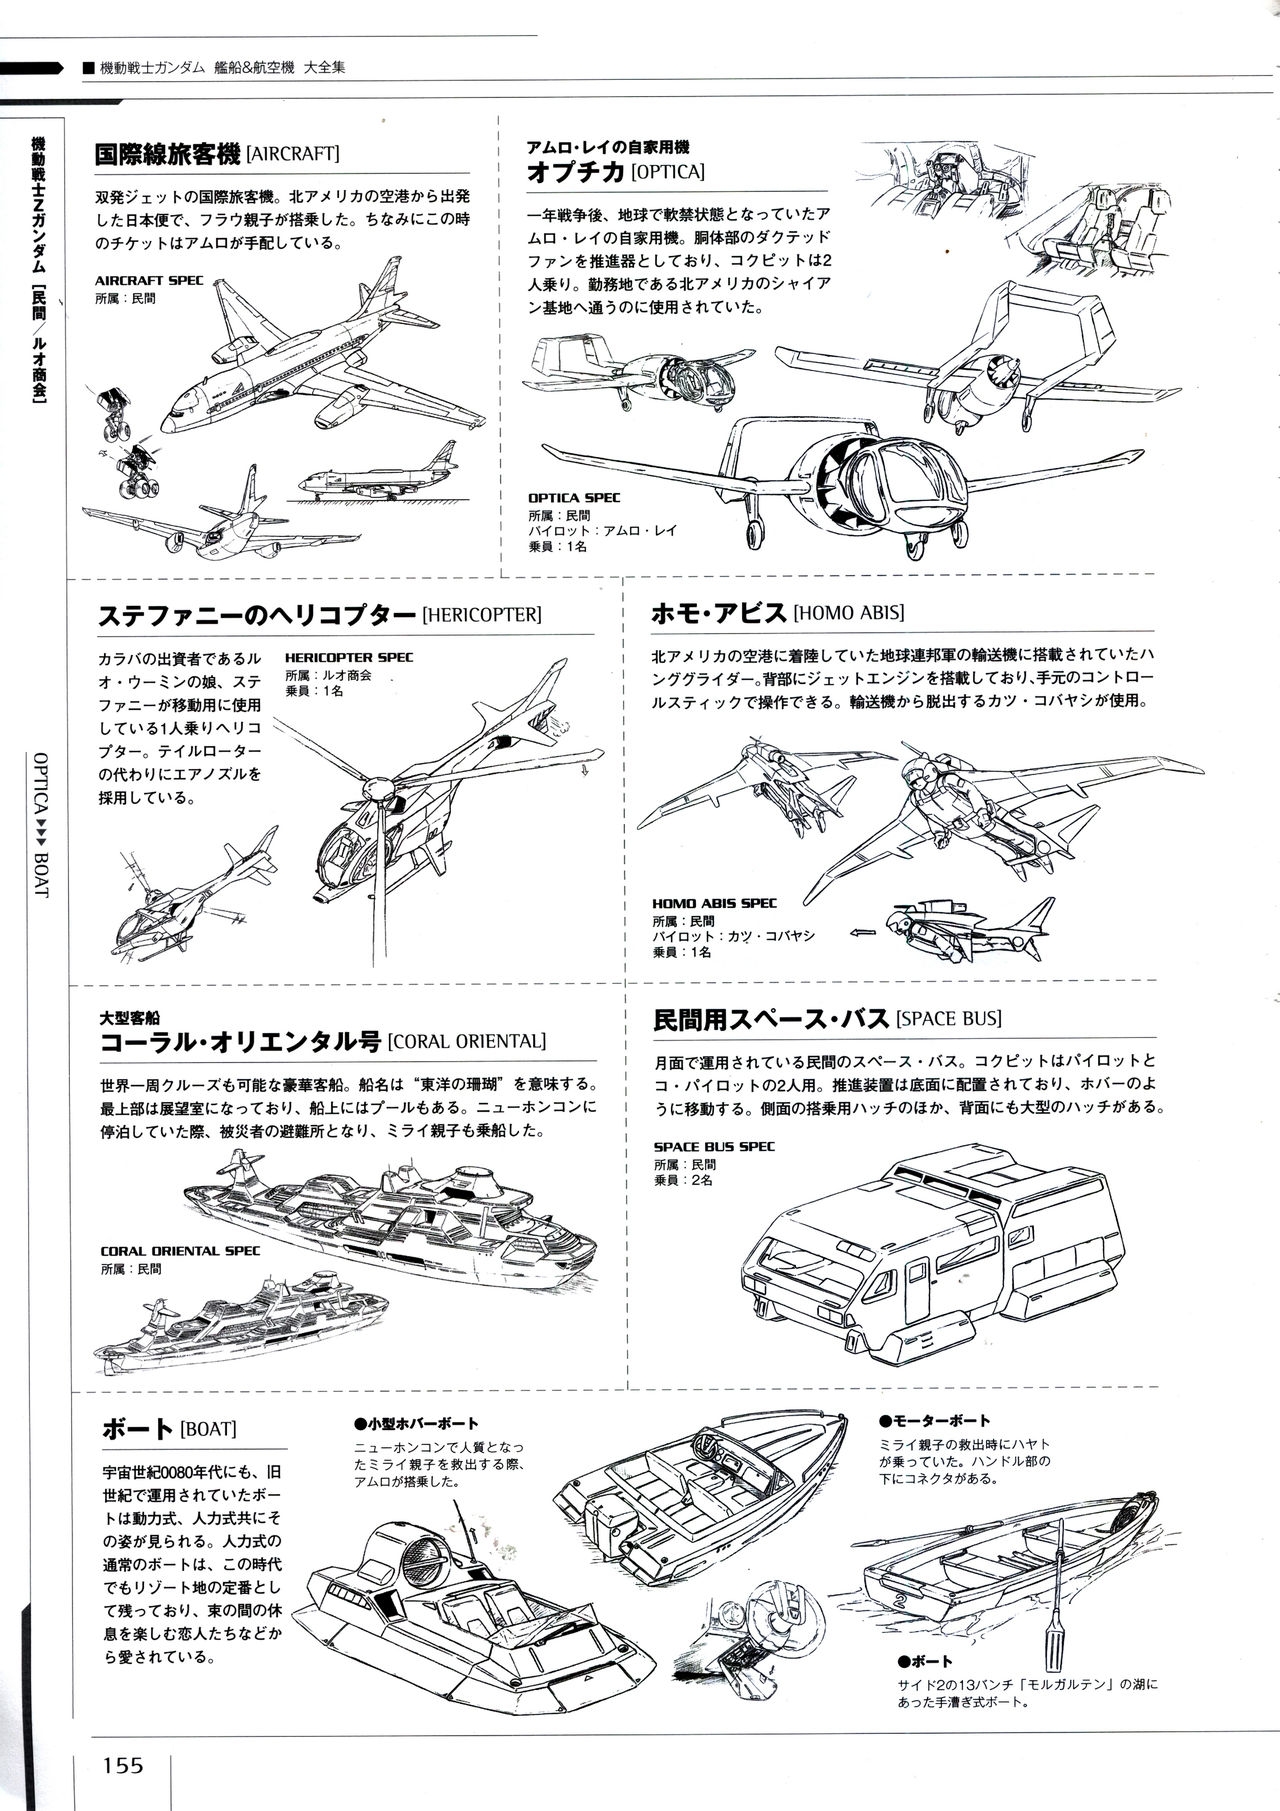 Mobile Suit Gundam - Ship & Aerospace Plane Encyclopedia - Revised Edition 160